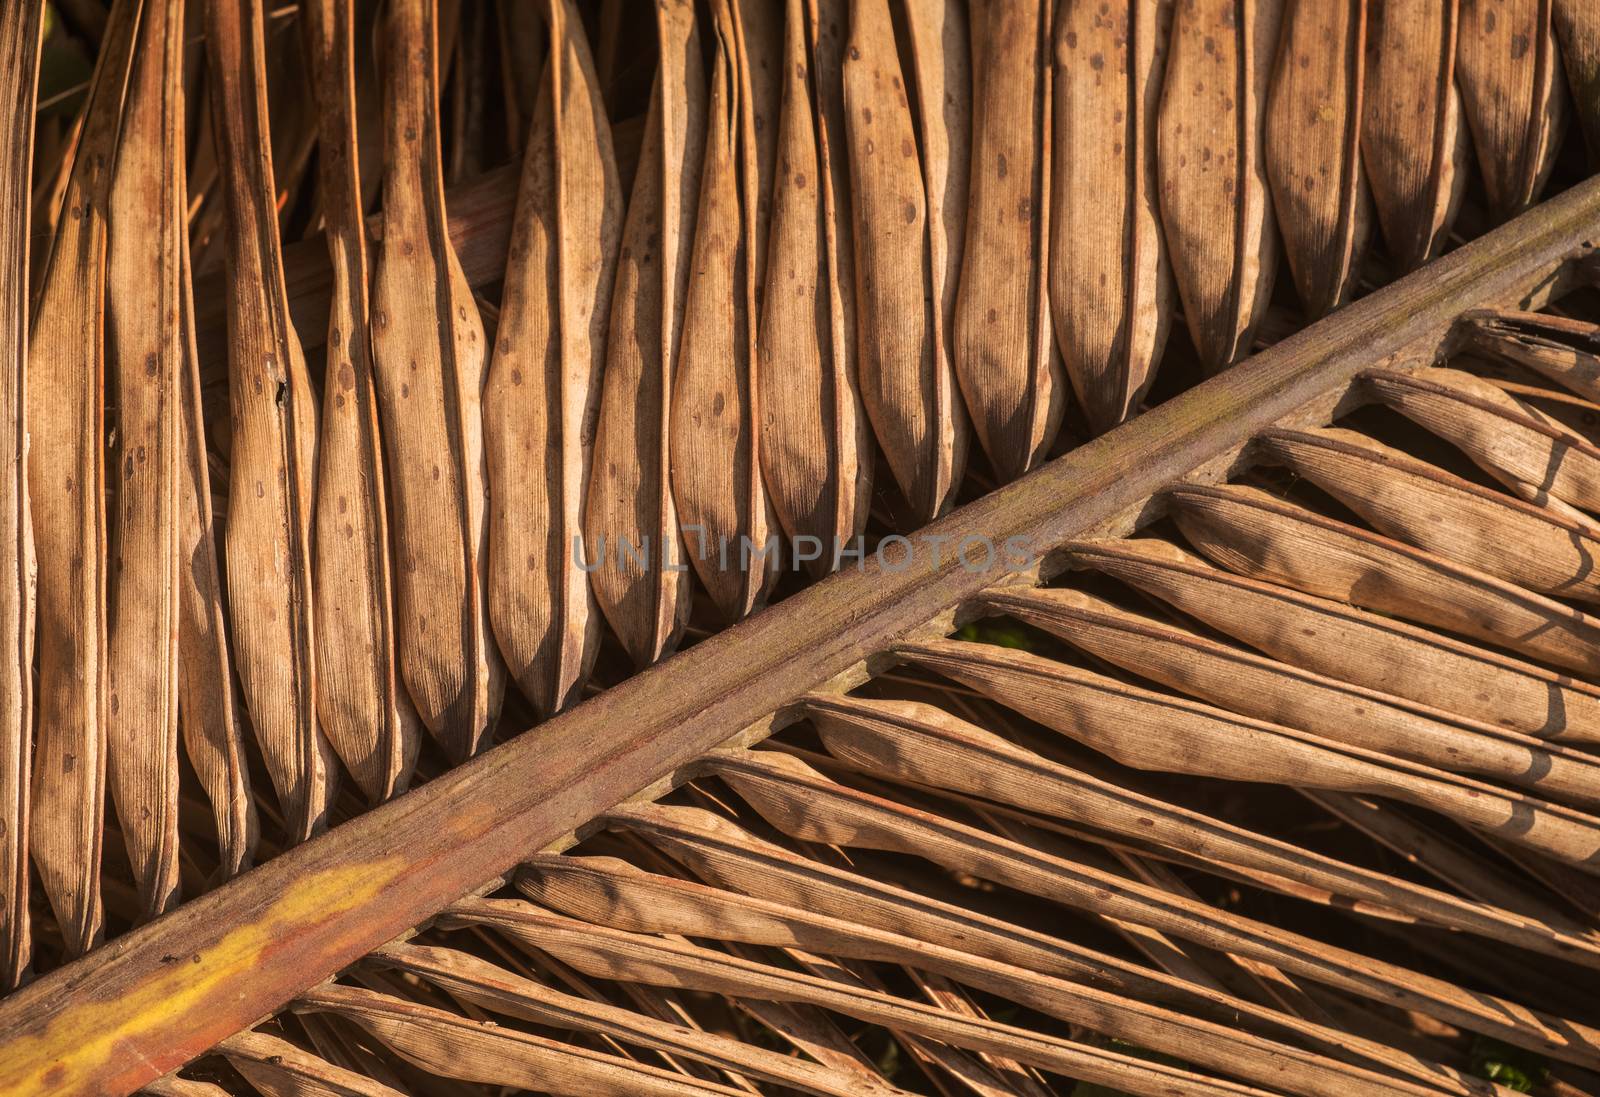 Dry Palm Leaf by snep_photo